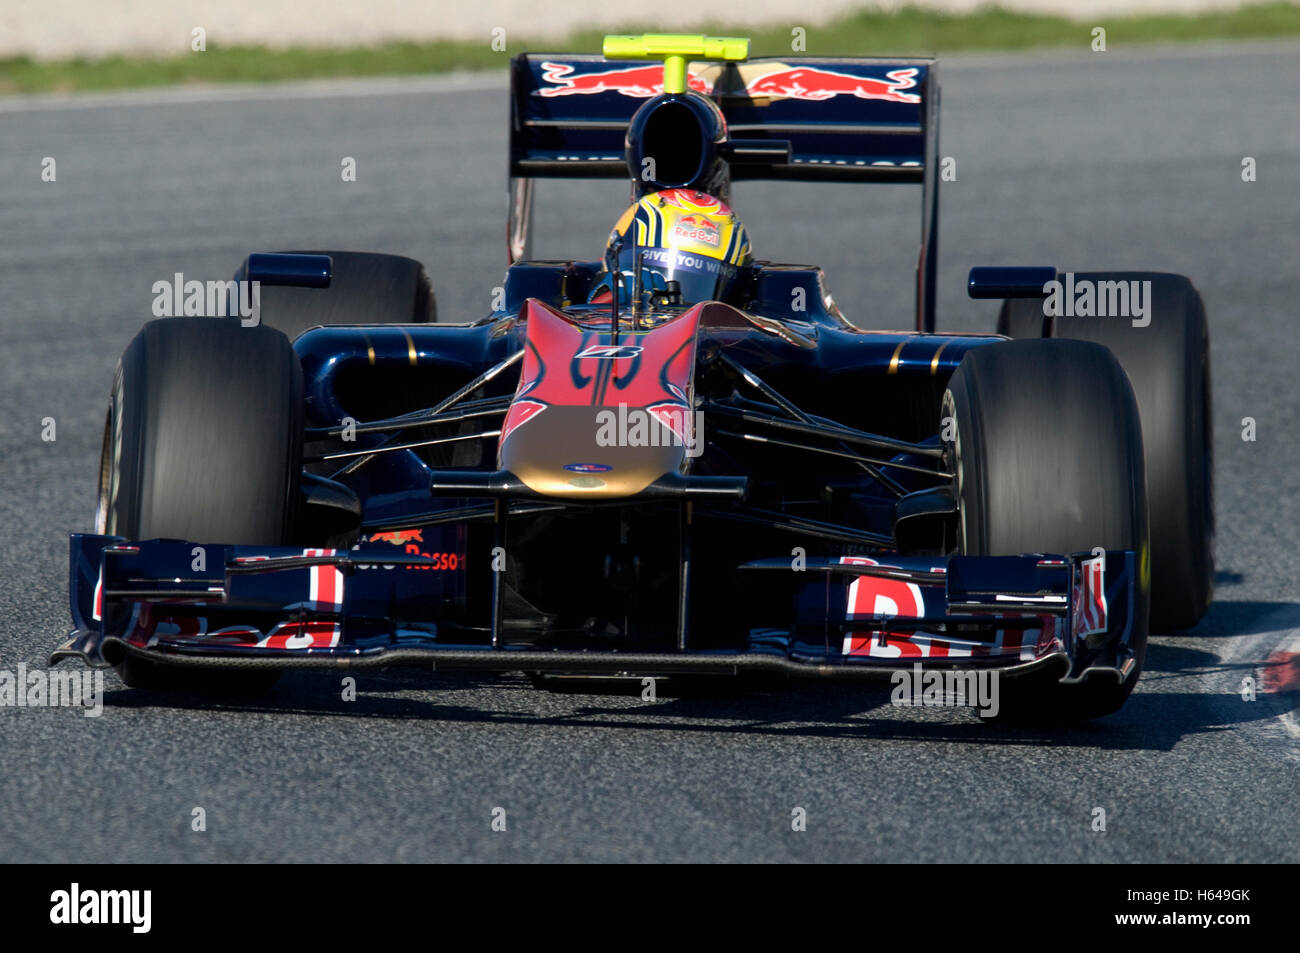 Motorsports, Jaime Alguersuari, SPA, in the Toro Rosso STR4 race car, Formula 1 testing at the Circuit de Catalunya race track Stock Photo